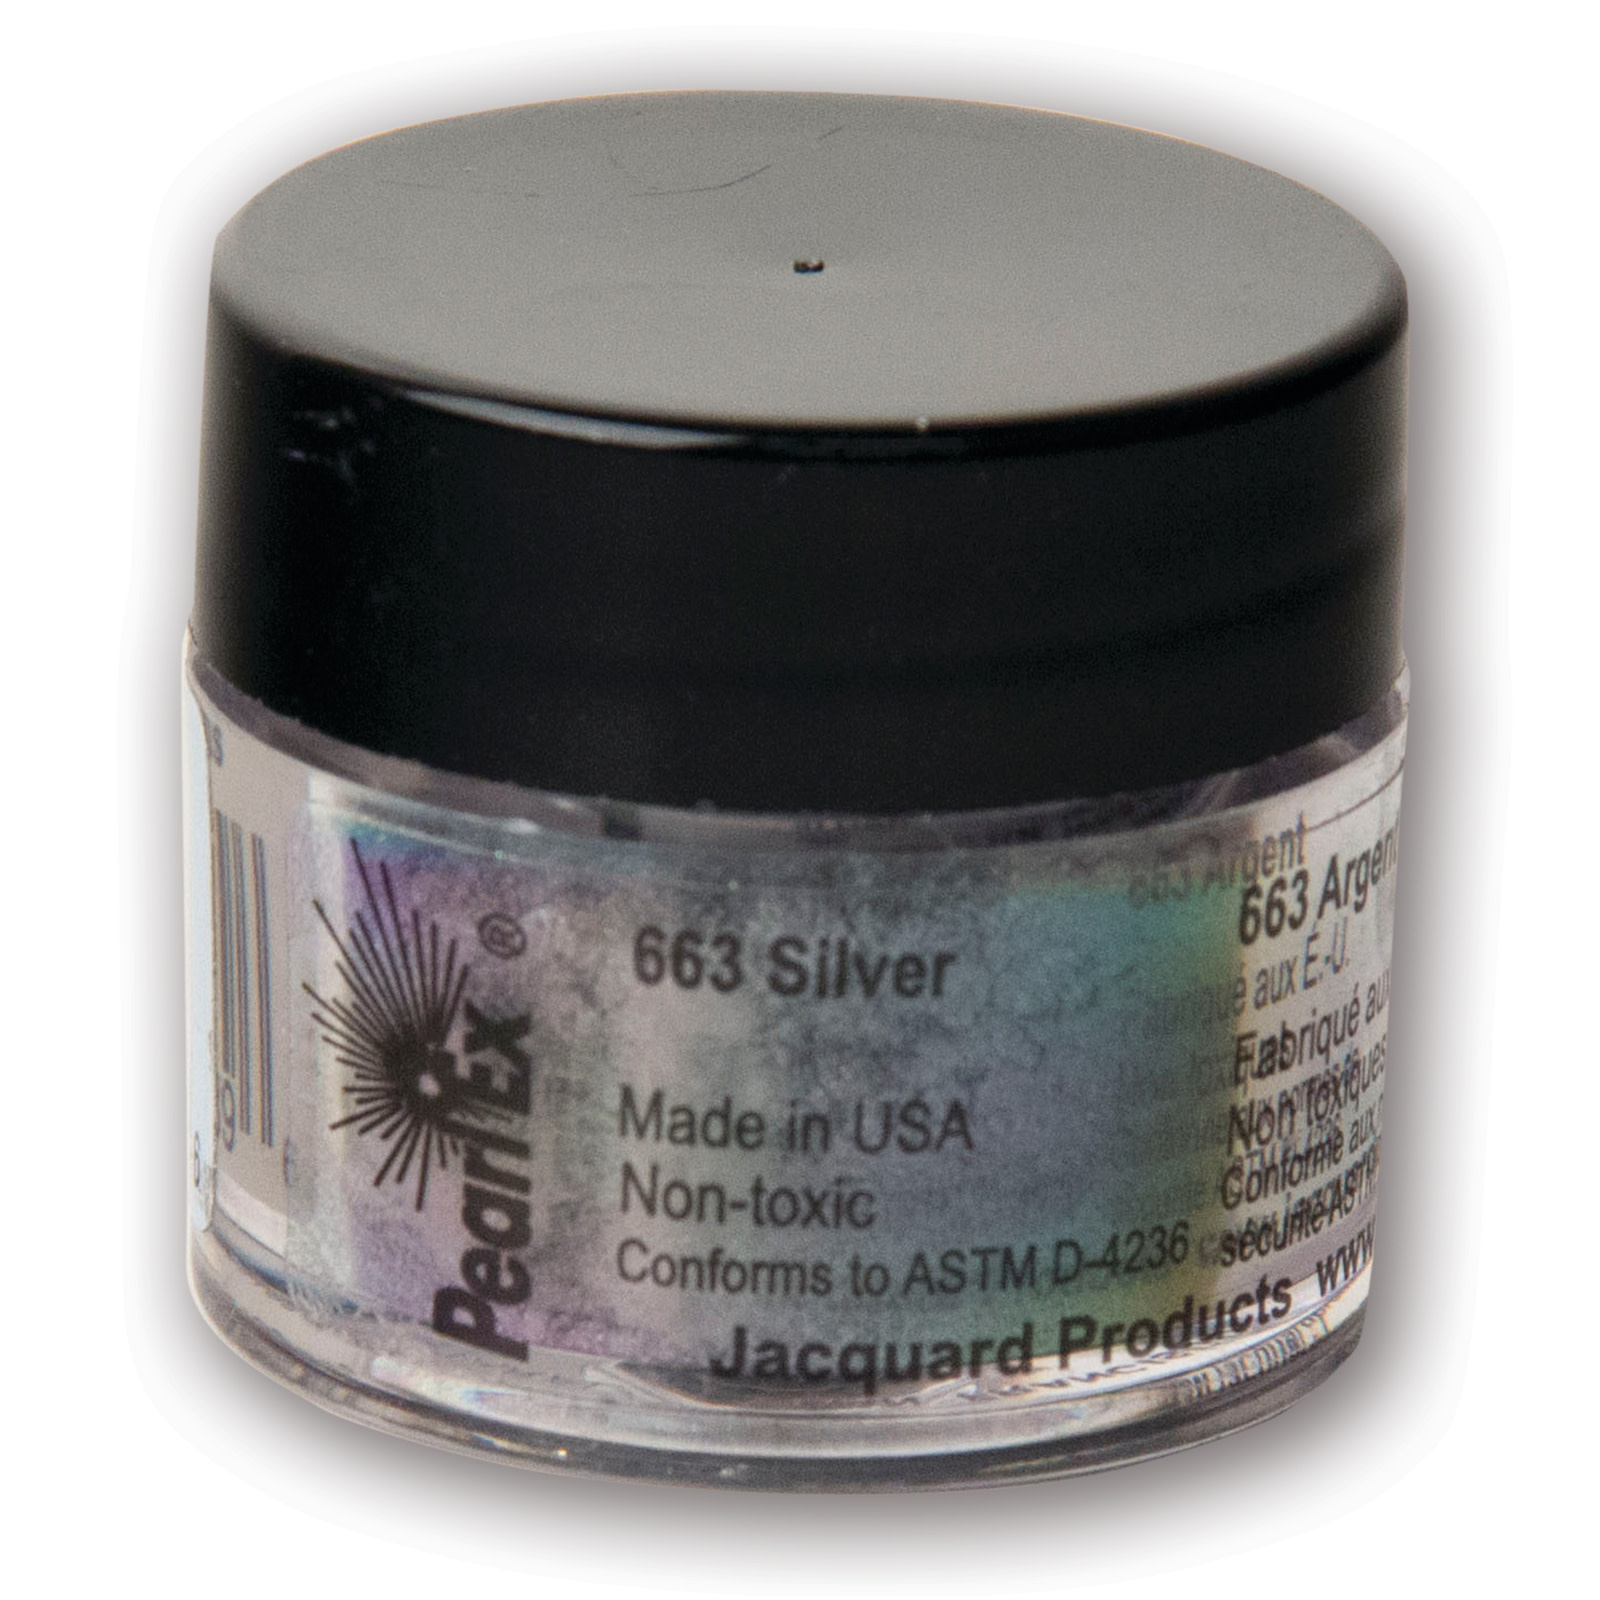 Jacquard Pearl Ex Powdered Pigment, 3g Jar, Silver